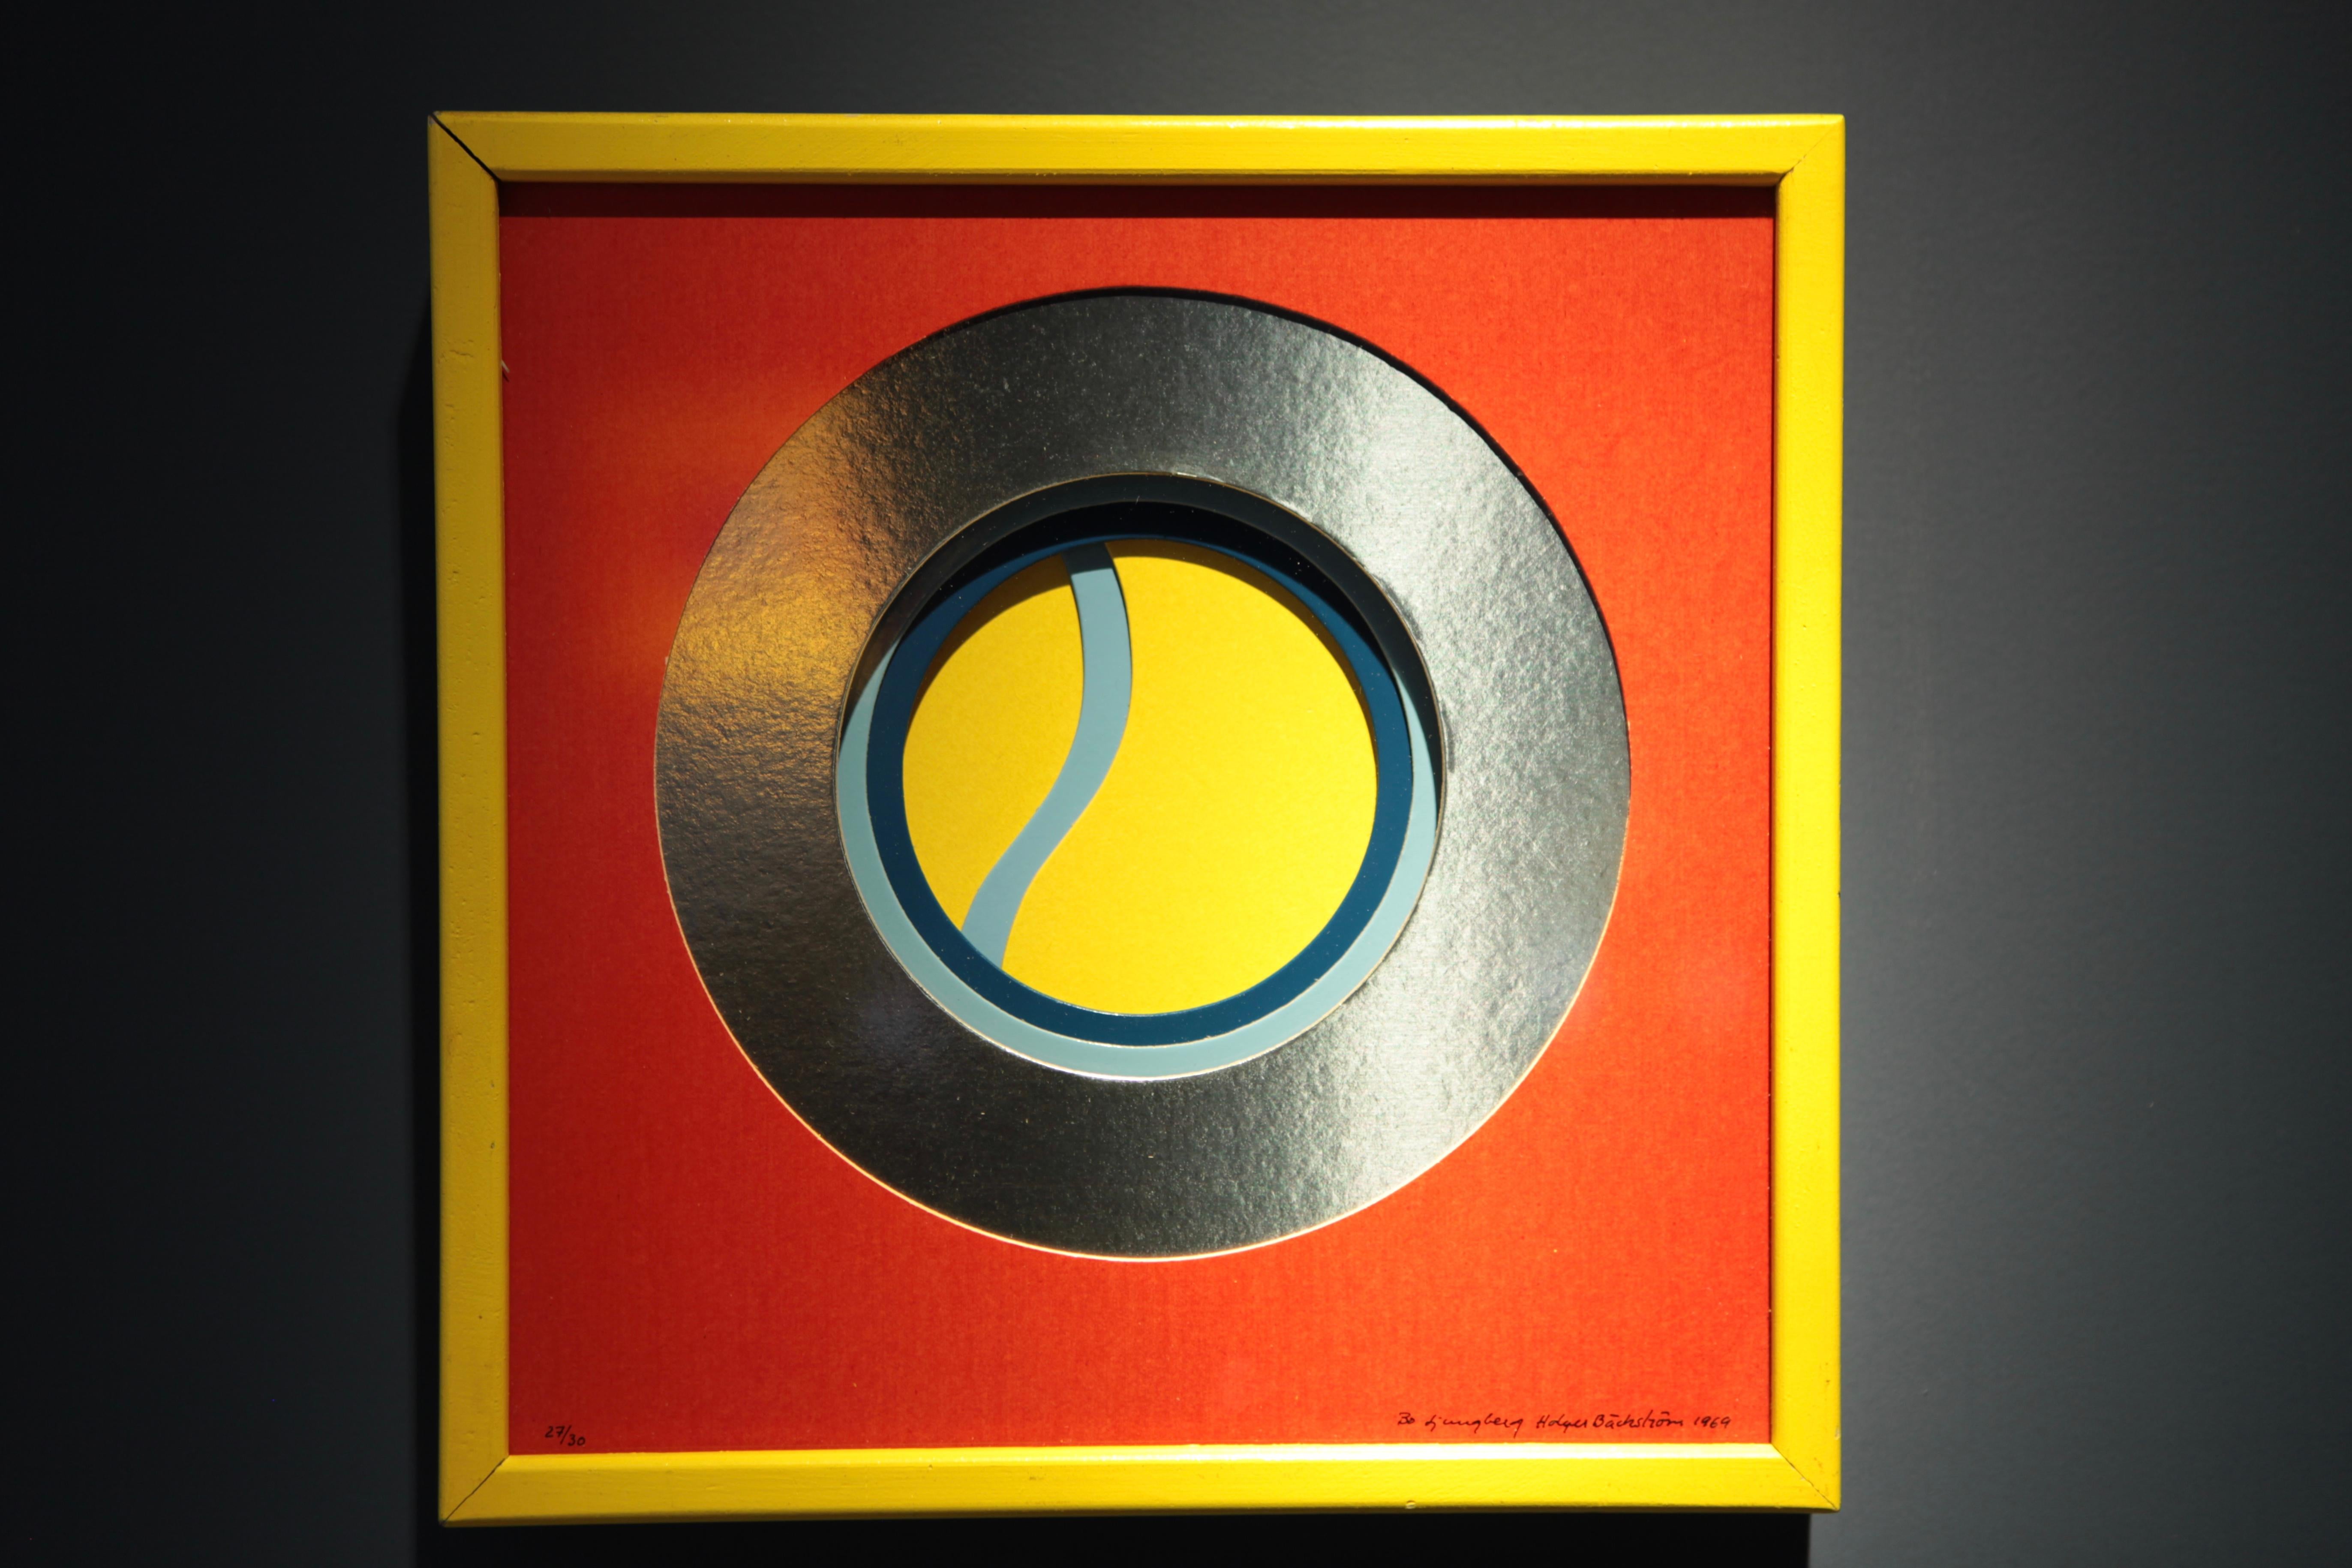 Un multiple original des designers suédois Beck & Jung (Holger Bäckström & Bo Ljungberg).
Carton coloré, cadre en bois jaune.
Signé Holger Bäckström et Bo Ljungberg 1969.